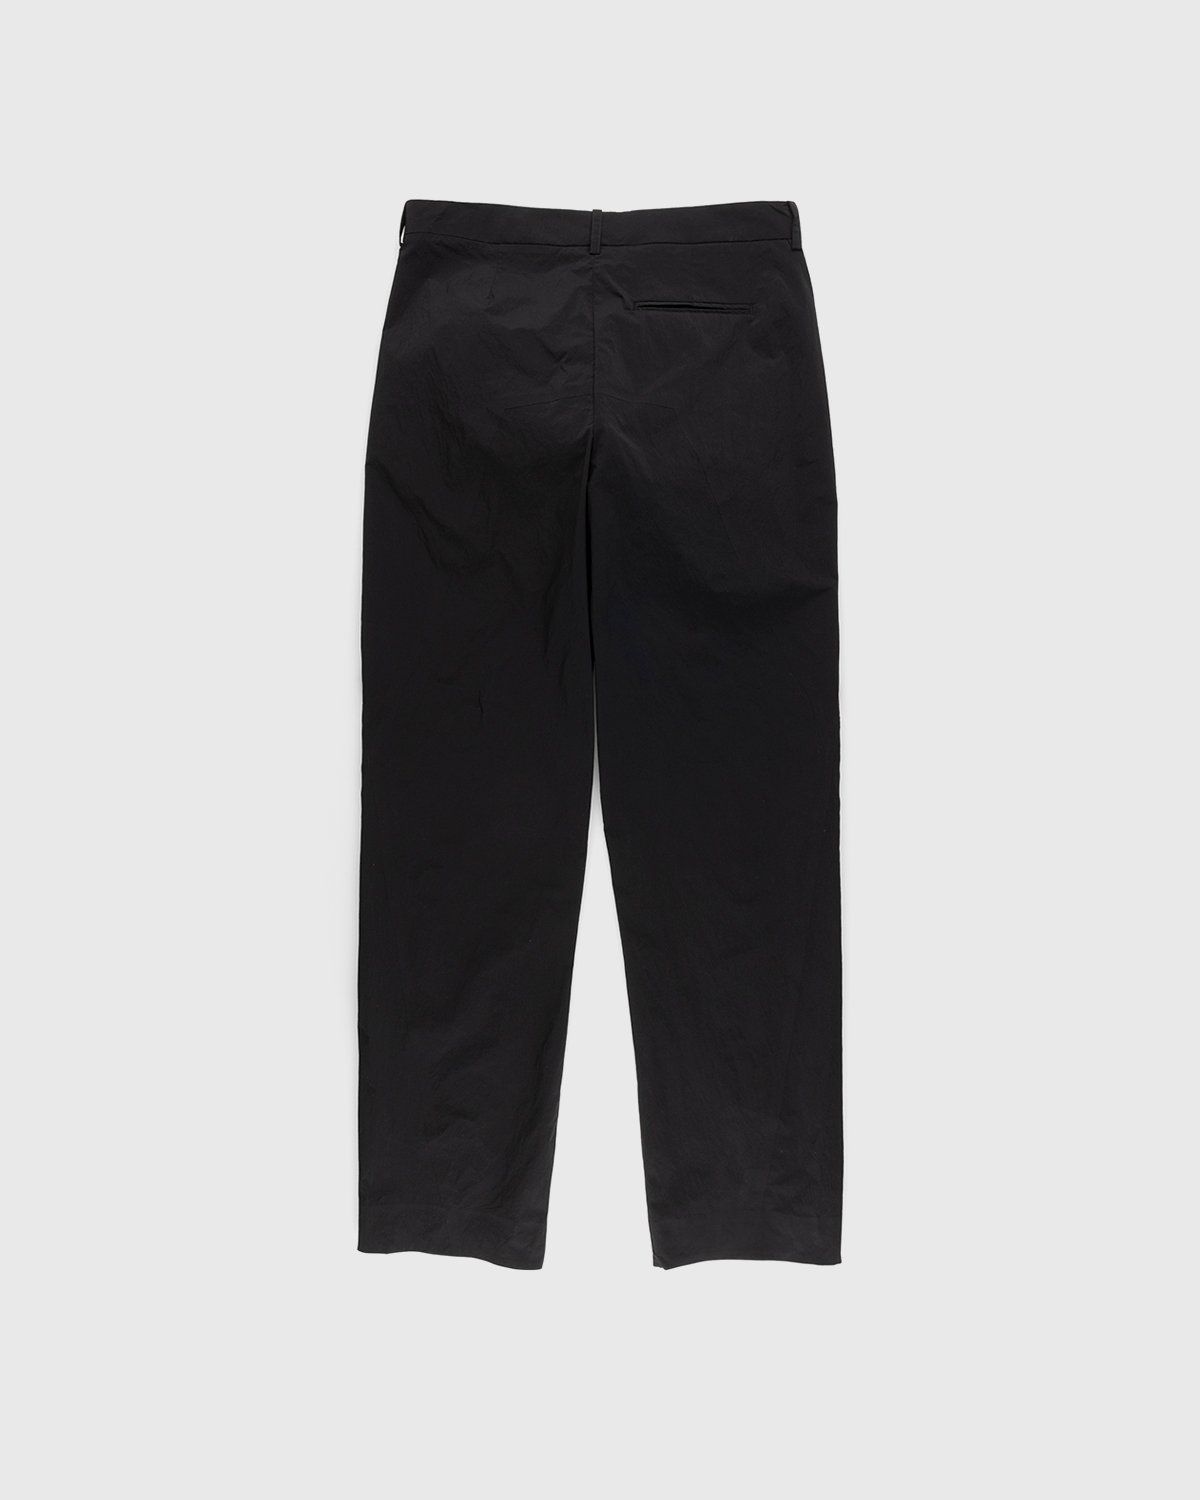 A-Cold-Wall* – Stealth Nylon Pant Black - Pants - Black - Image 2